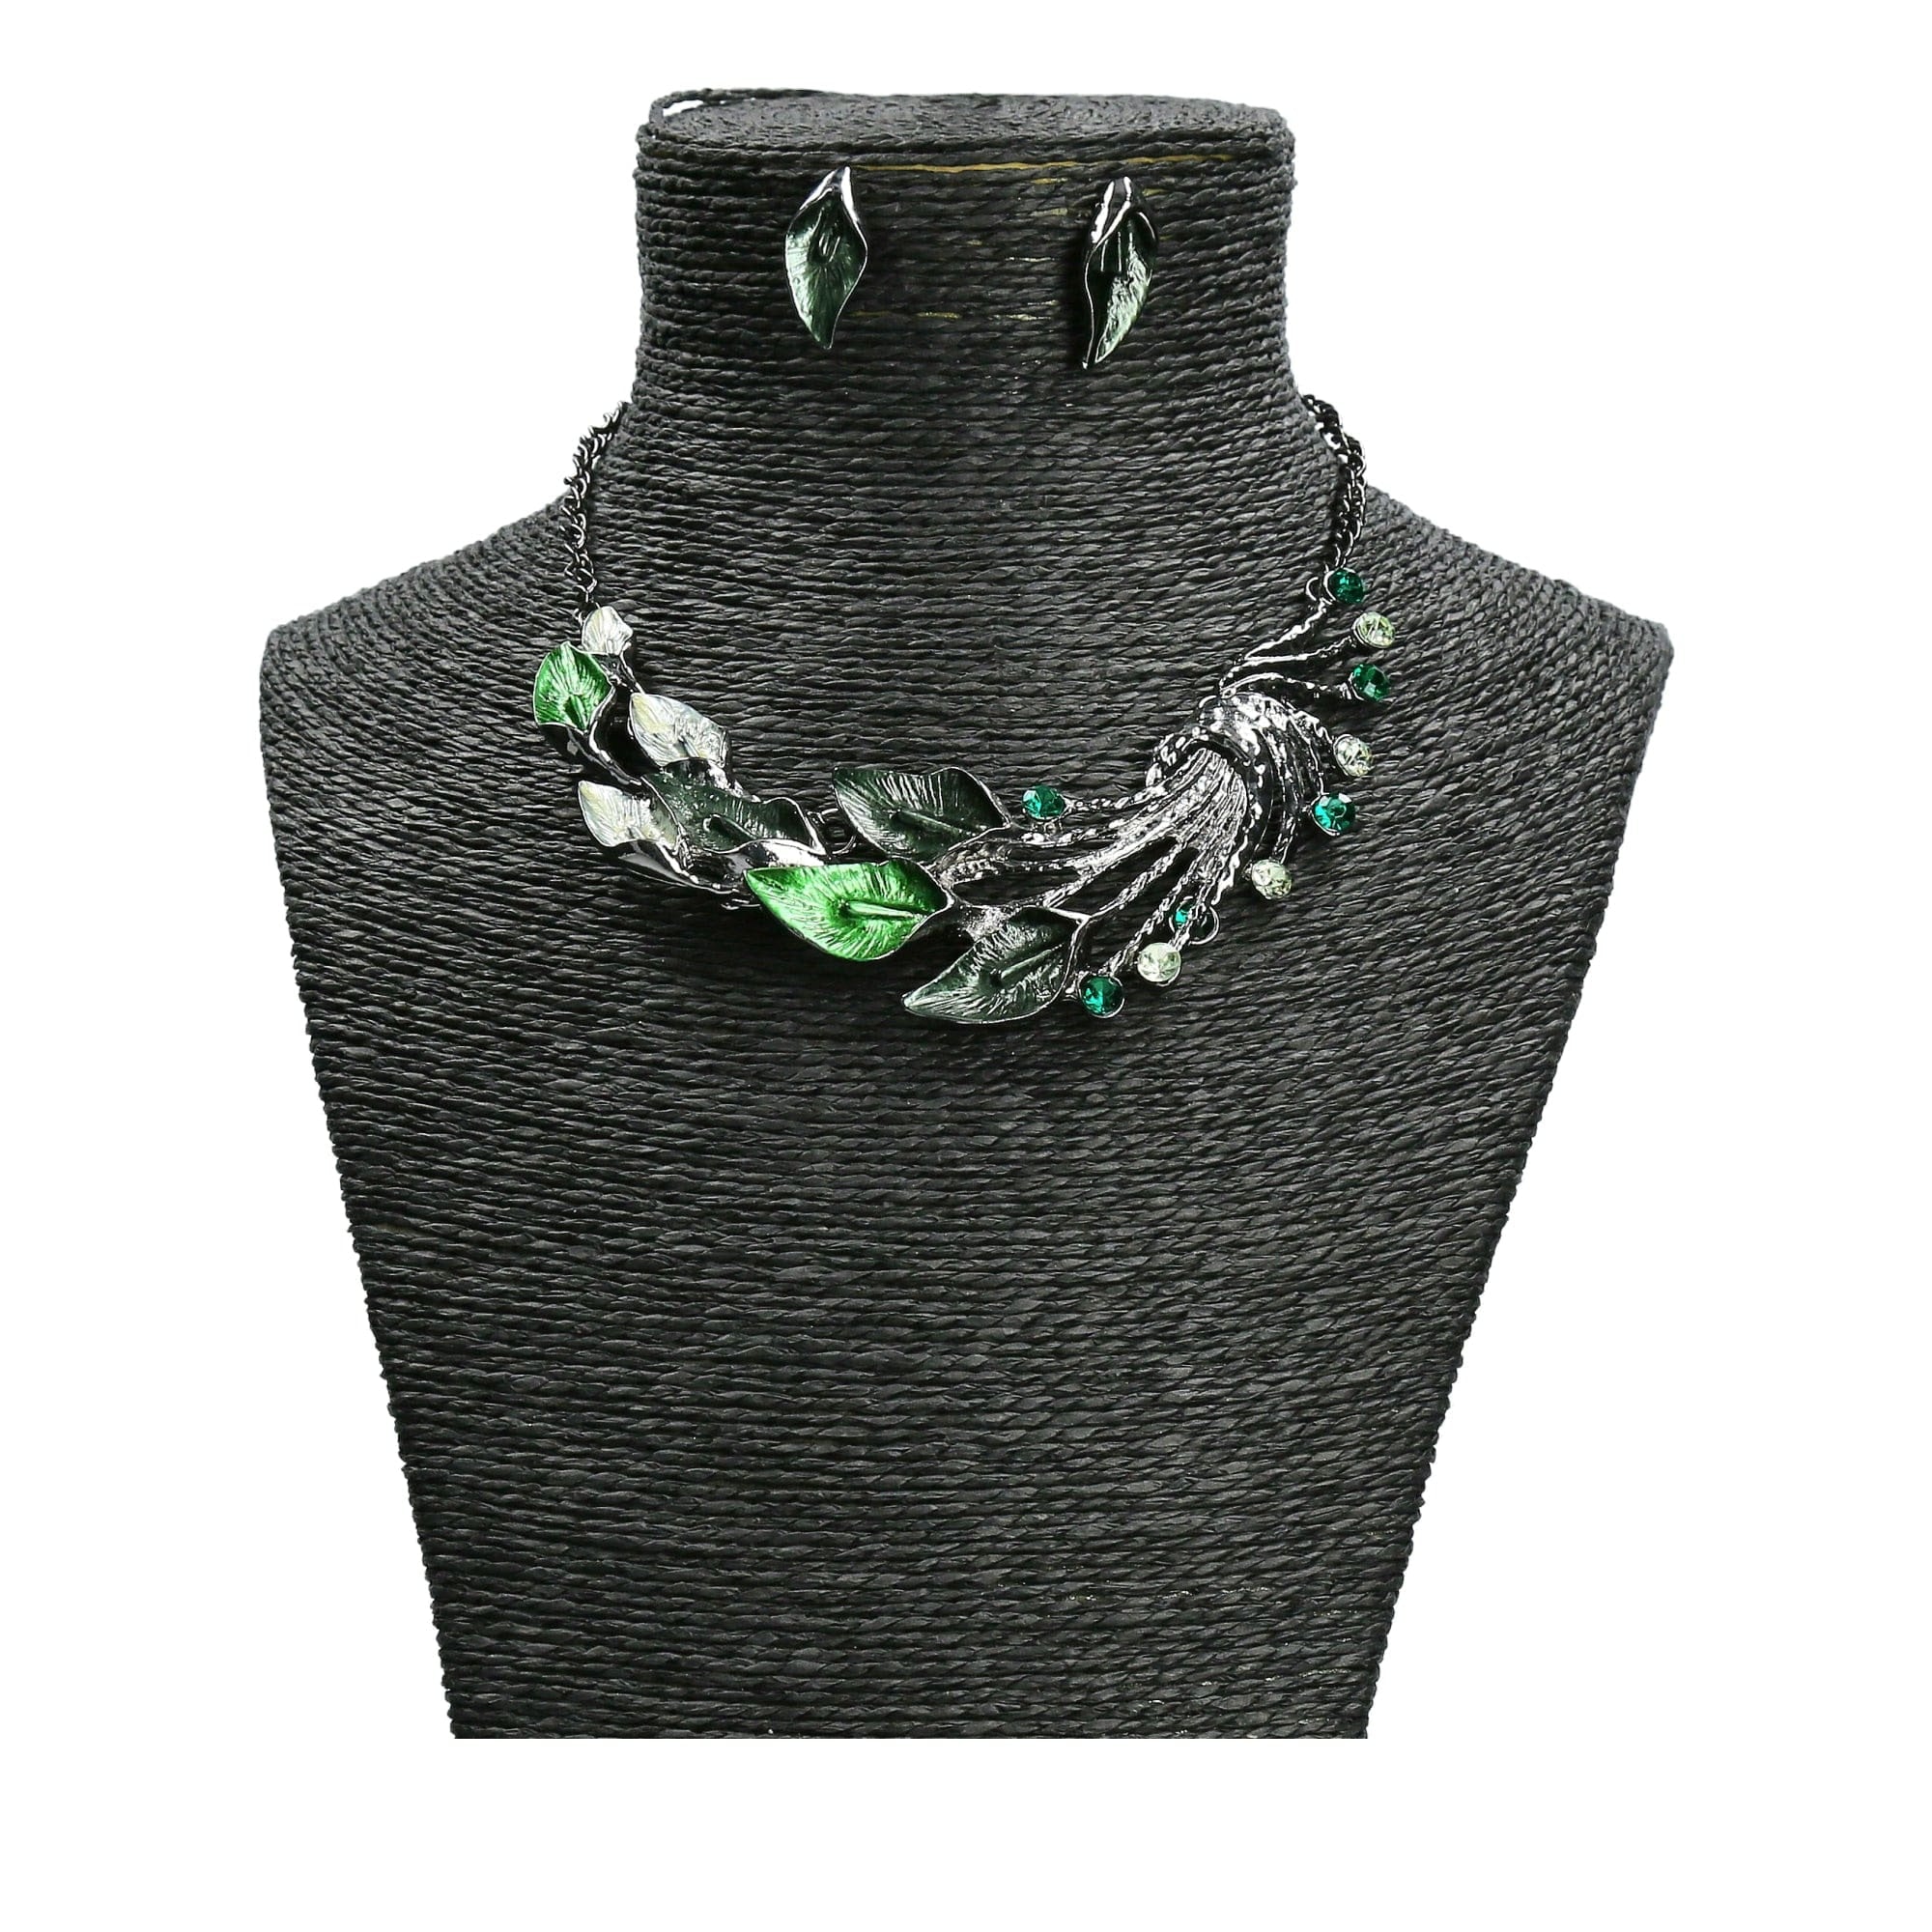 Styx smyckesset - Grön - Halsband